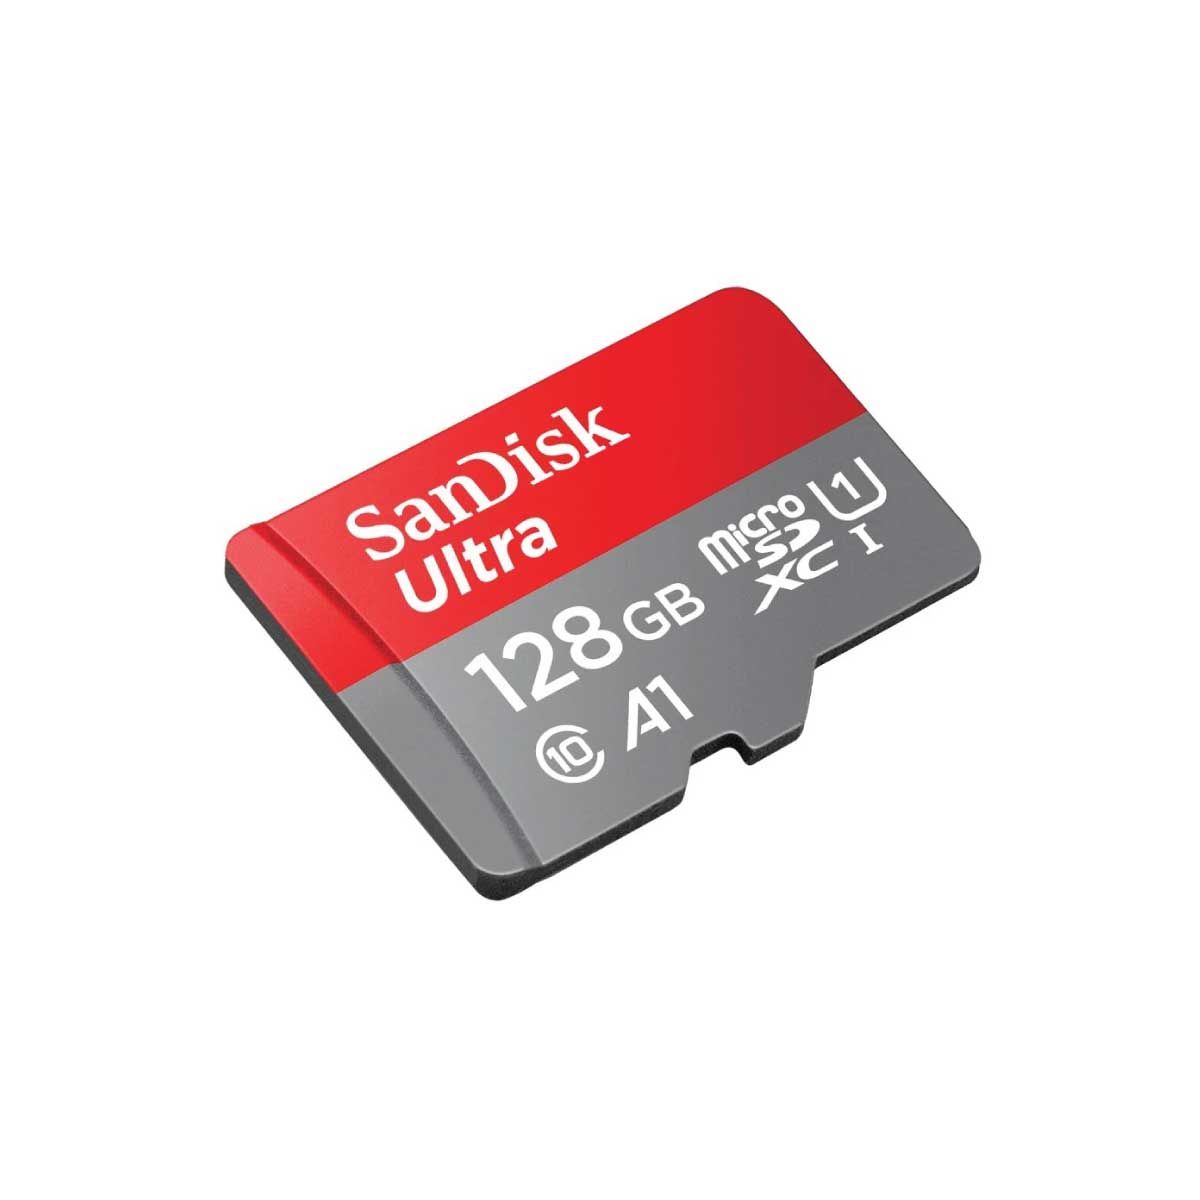 SANDISK MICRO SD CARD Ultra 128 GB รุ่น SDSQUAB-0128G-GN6MN